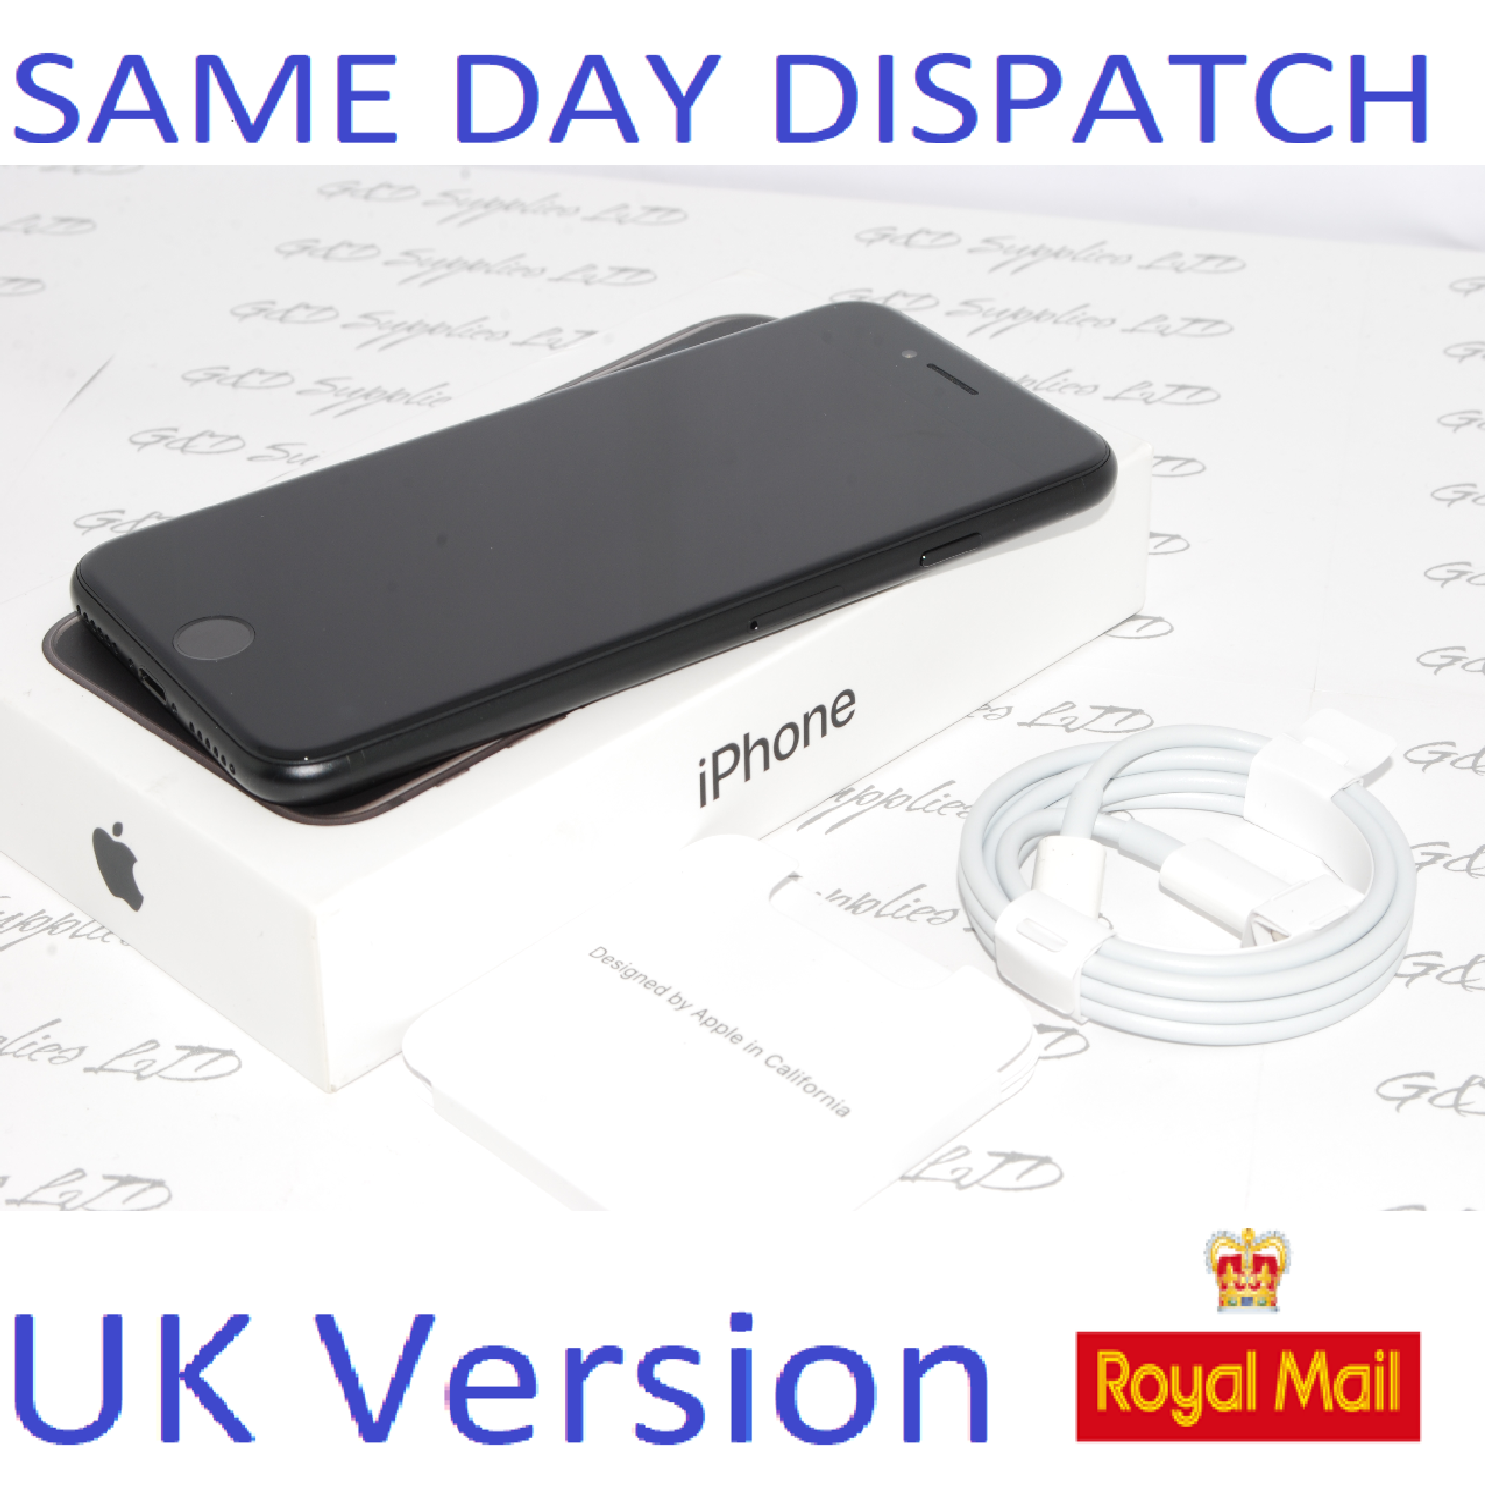 iPhone SE 2nd Gen (2020) unlocked MHGT3B/A 128GB Black UK Version NEW Condition #